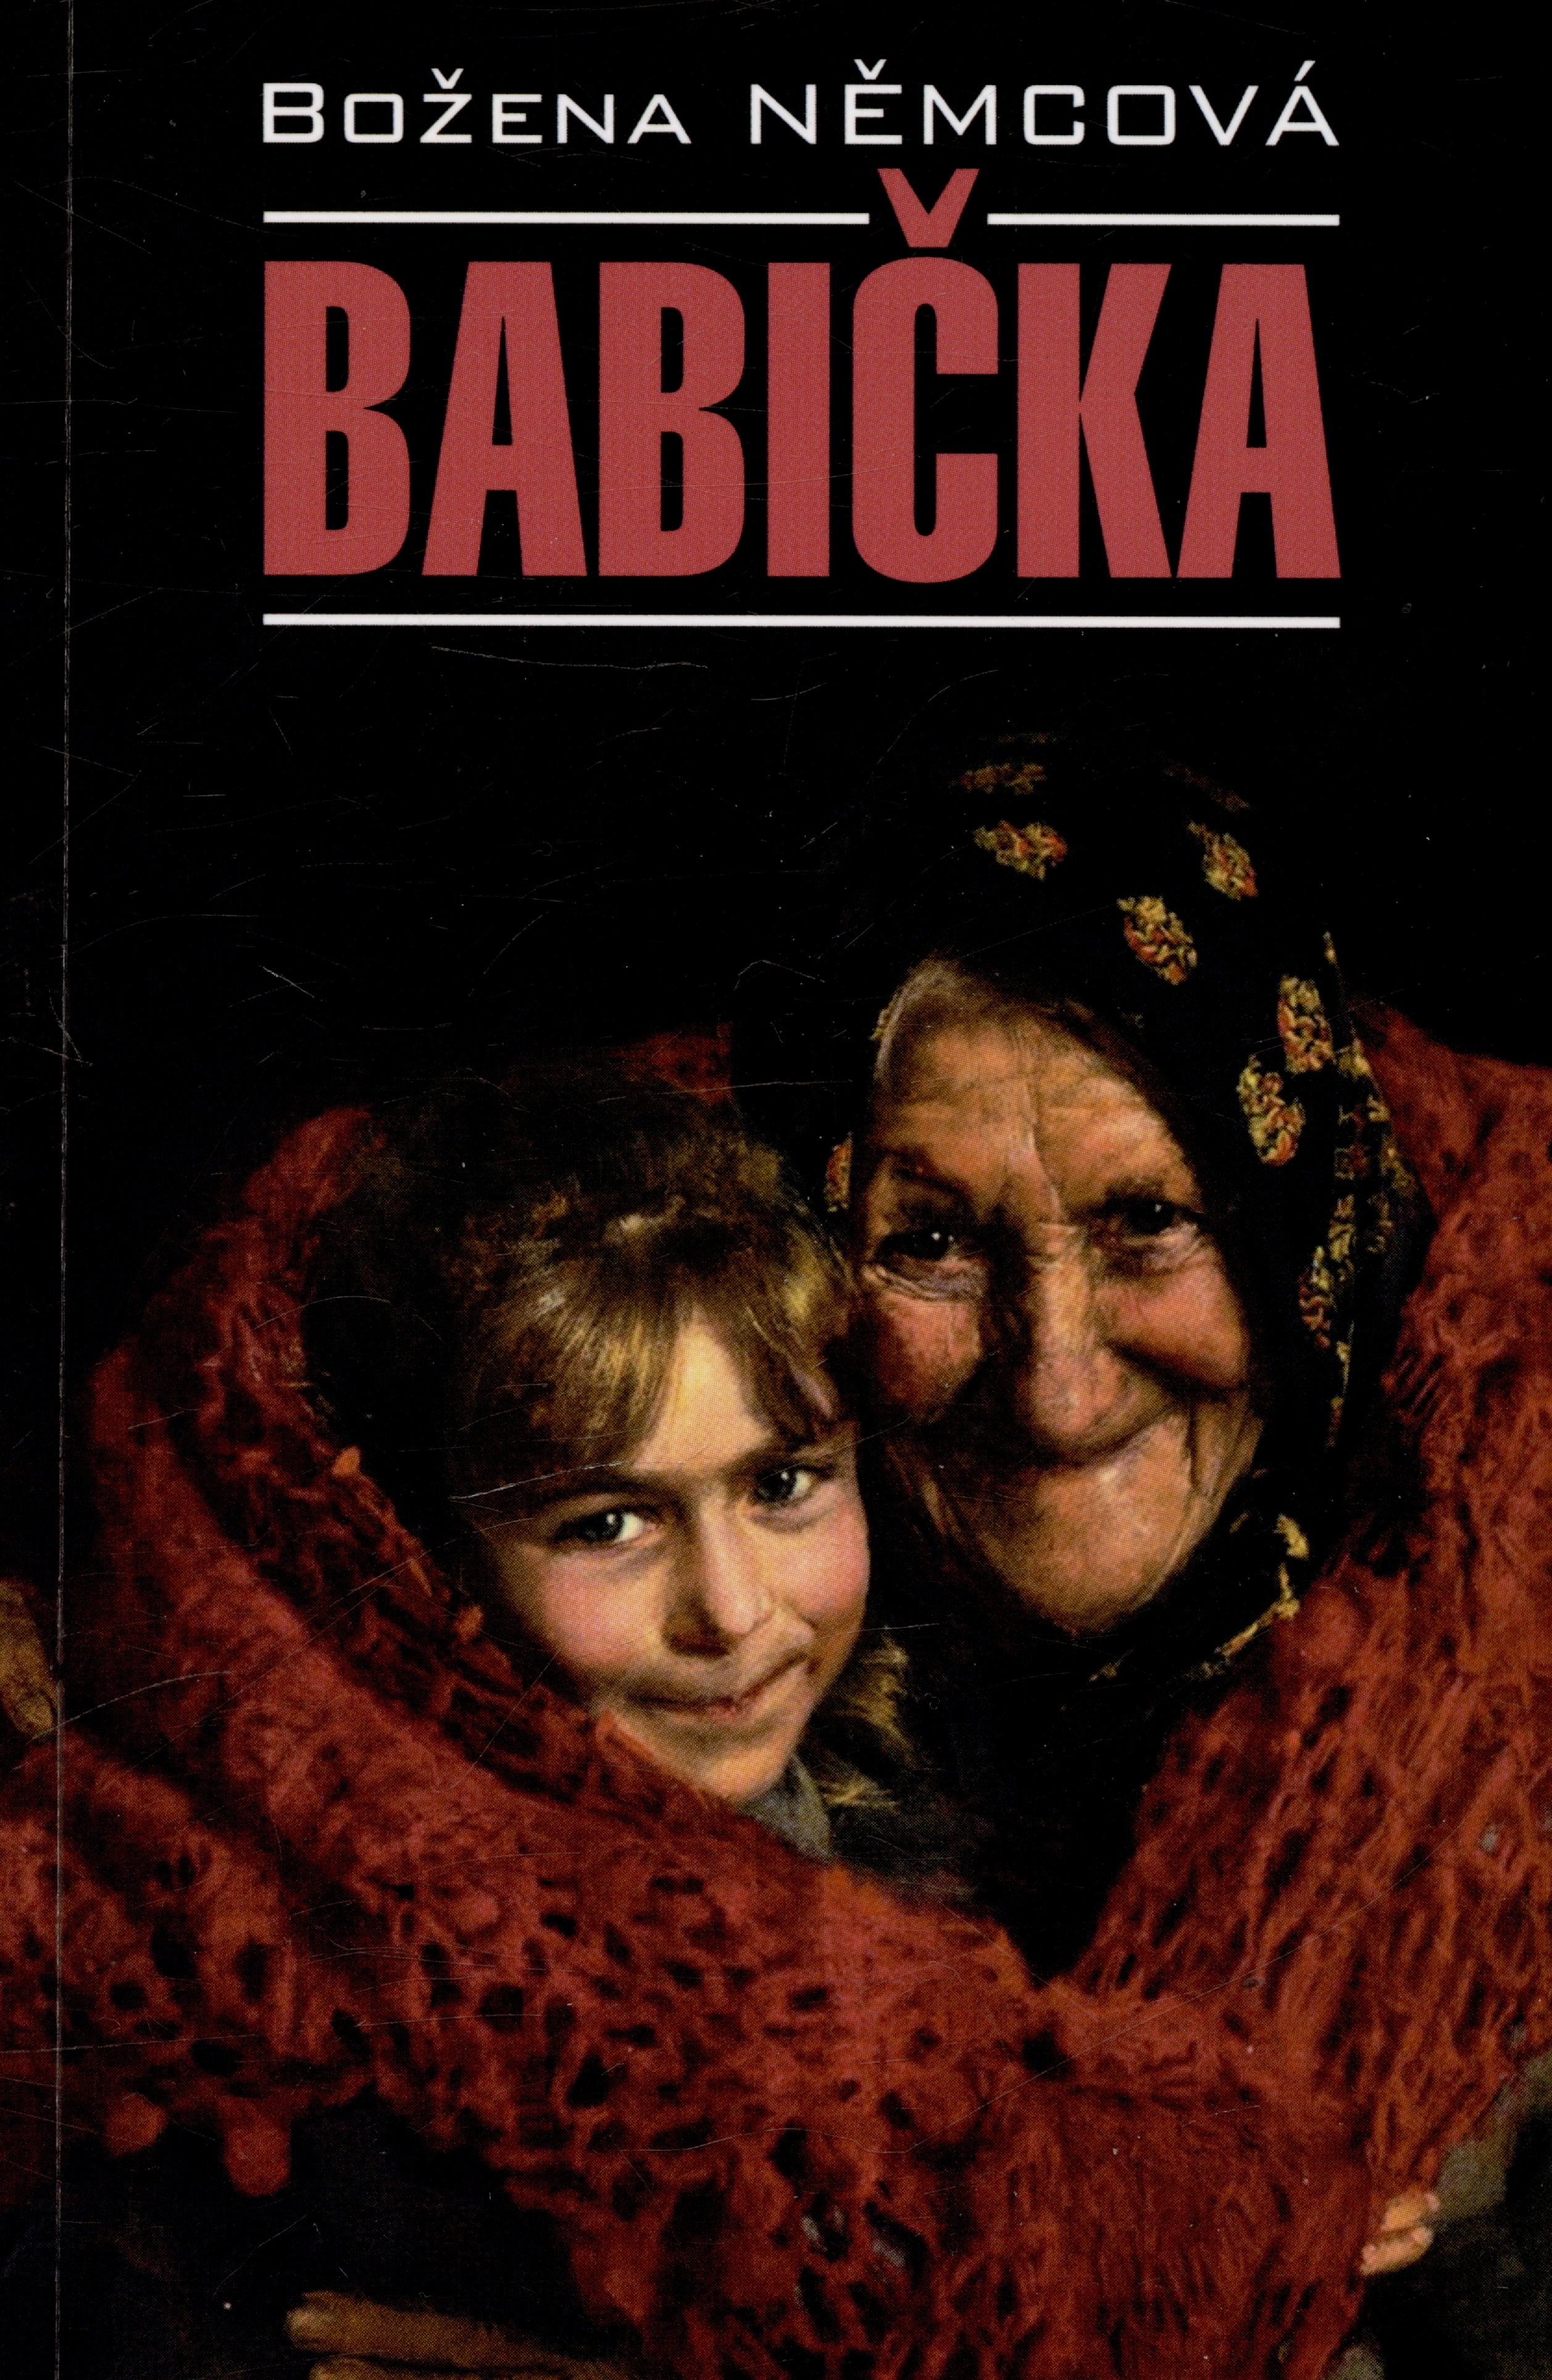 Немцова Божена Babicka / Бабушка ( книга для чтения на чешском языке)